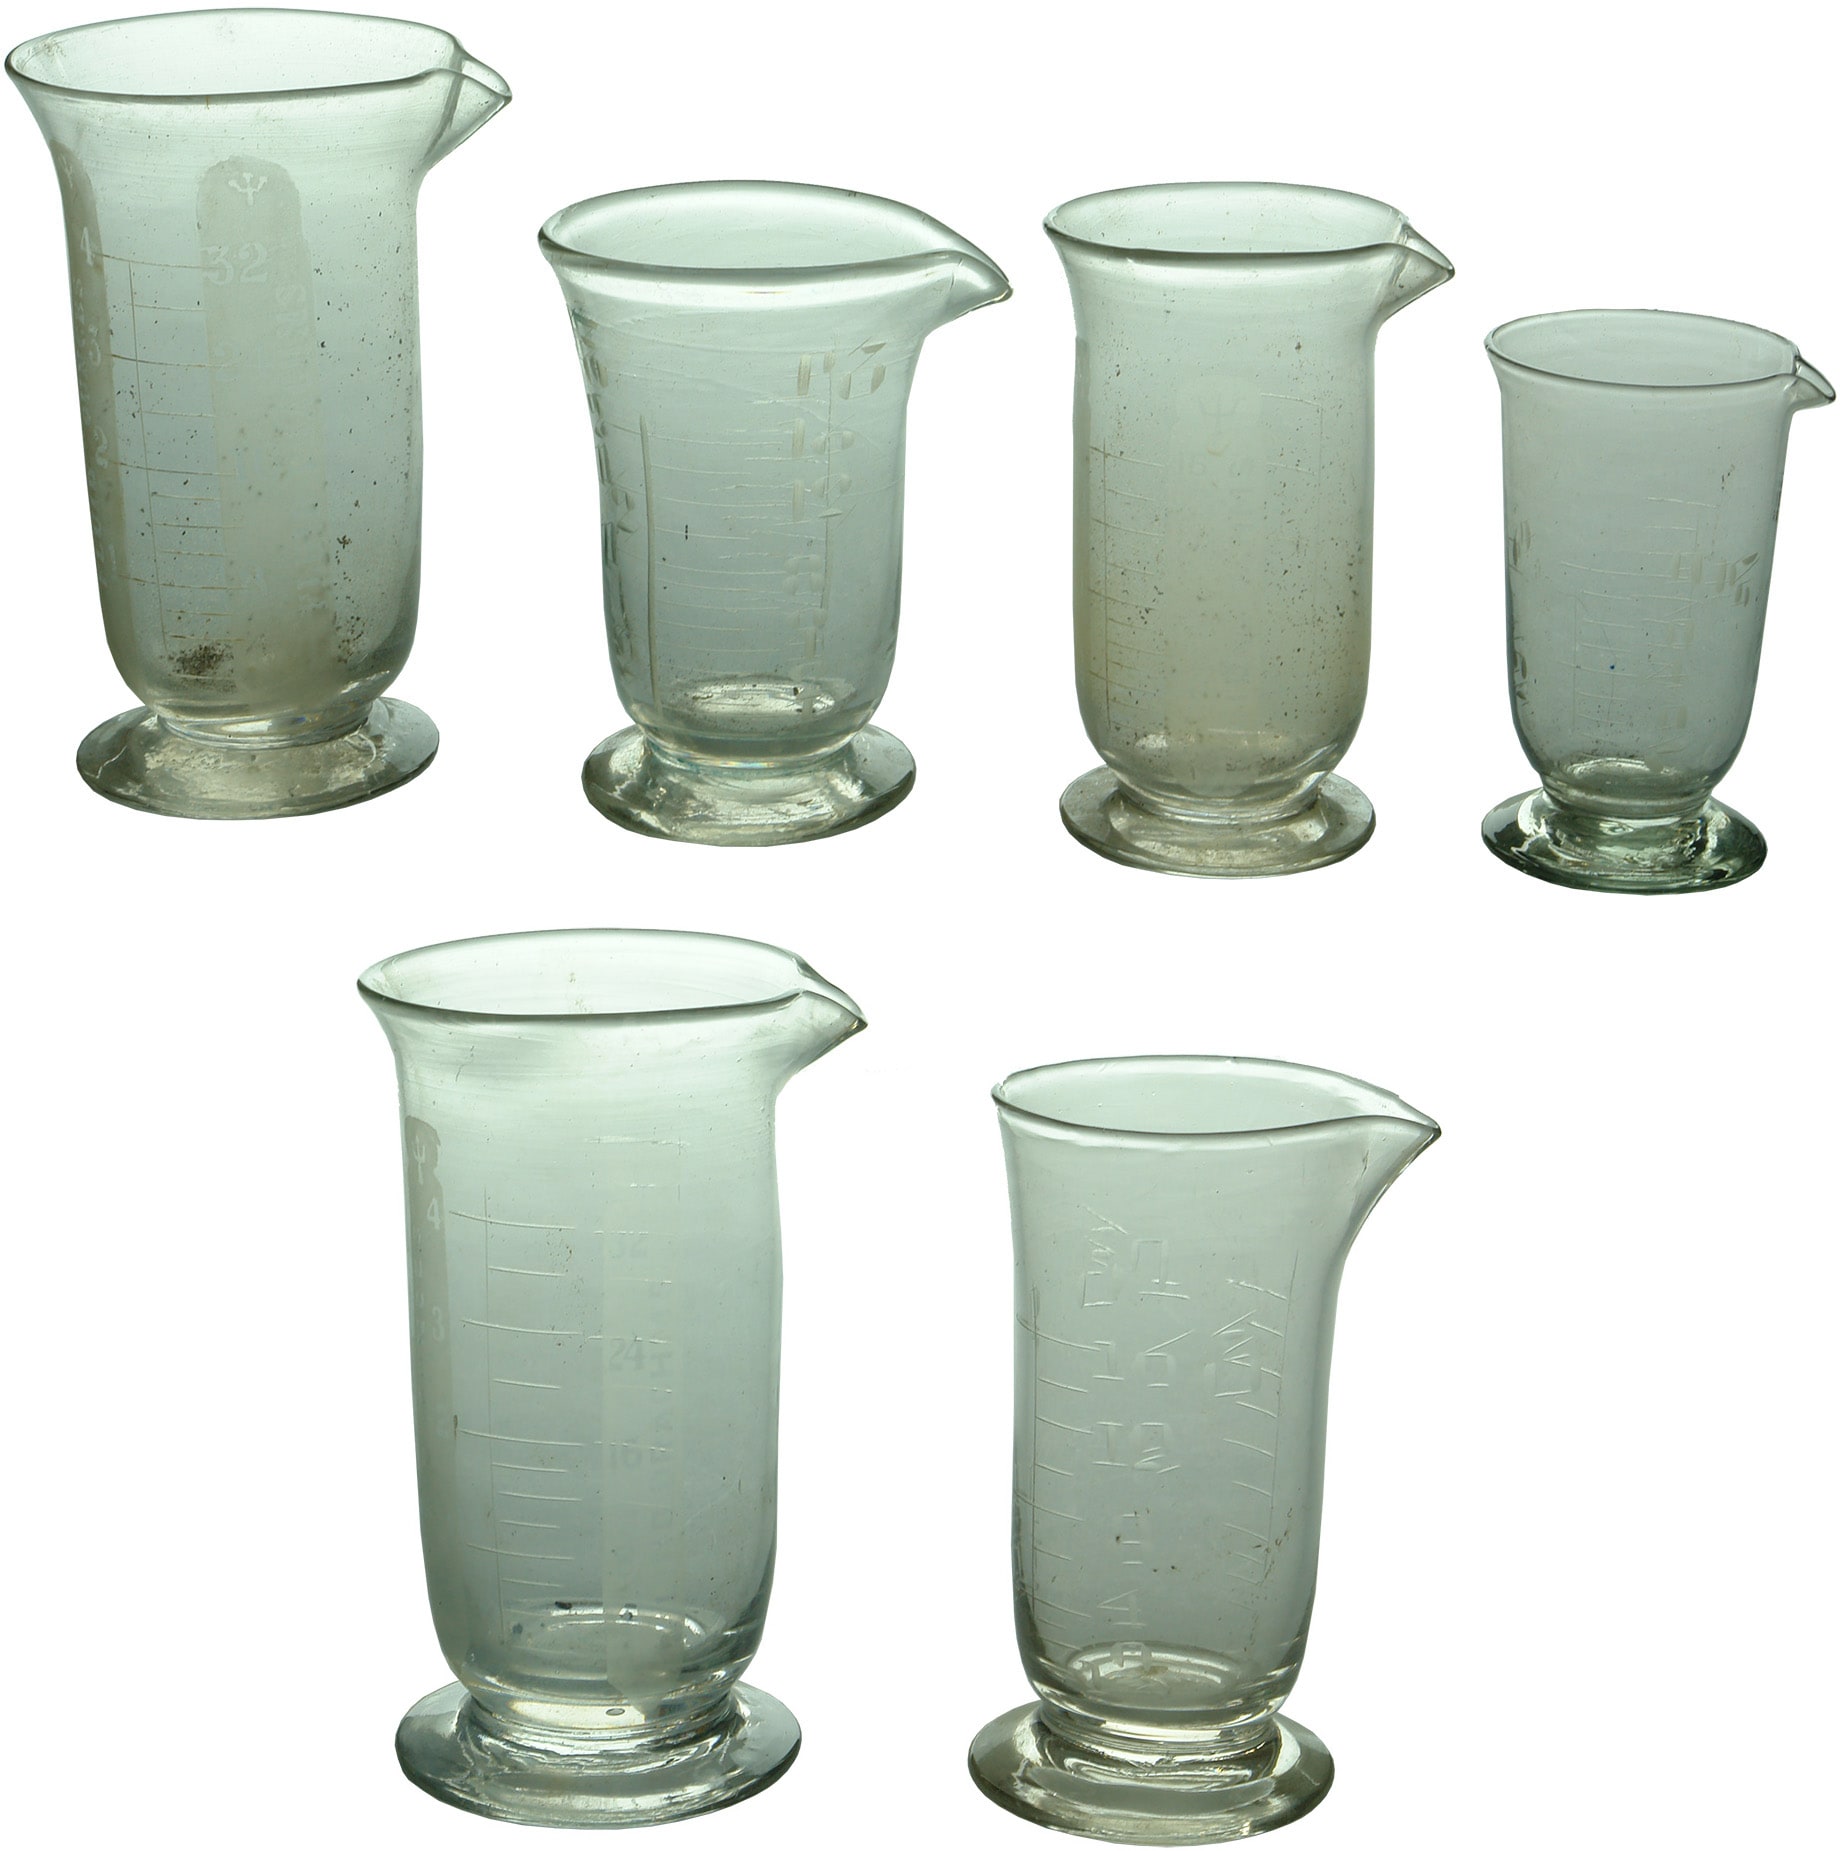 Early Pharmacy Measuring Glass Beakers